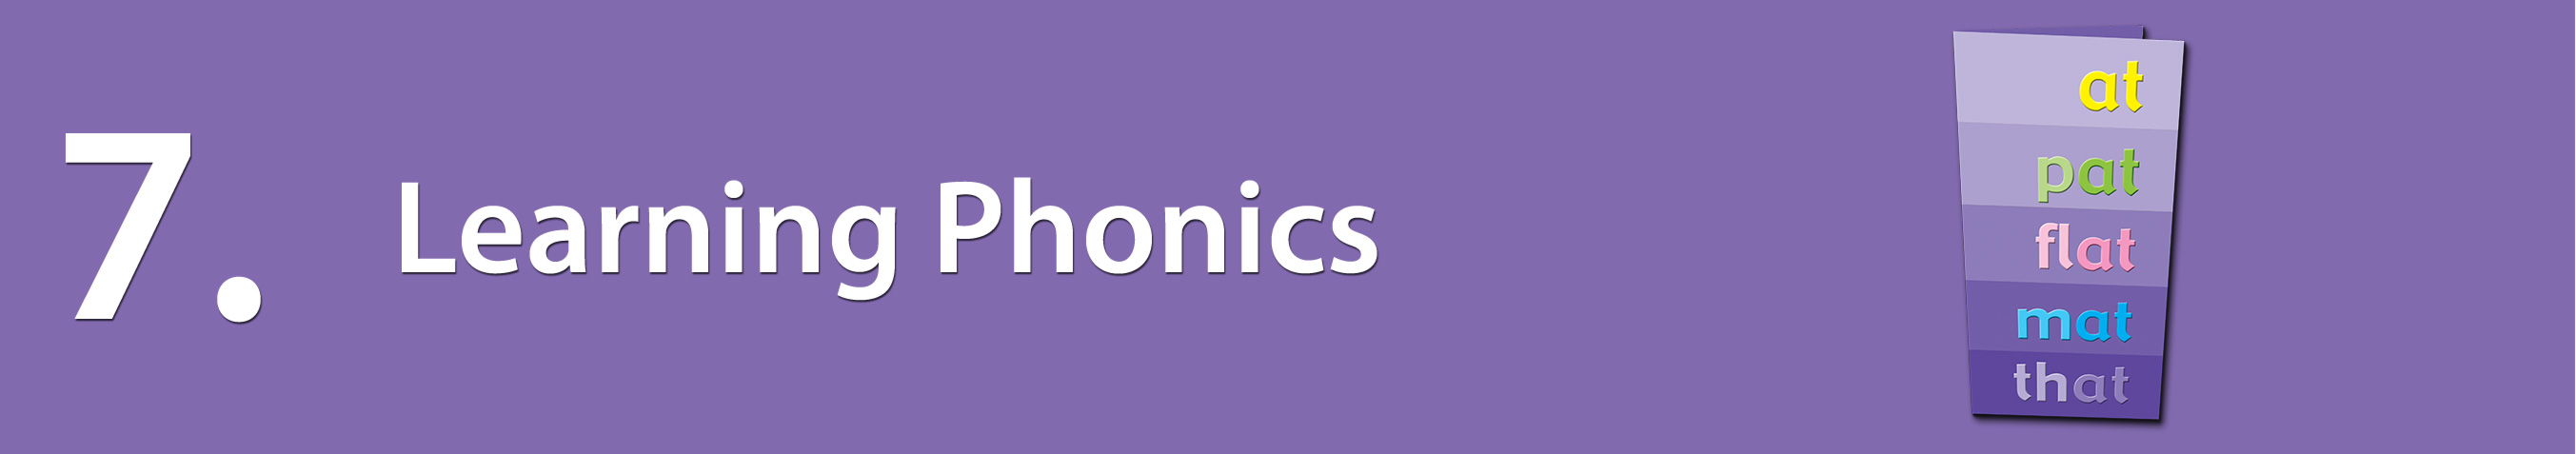 Milestone 7: Learning Phonics